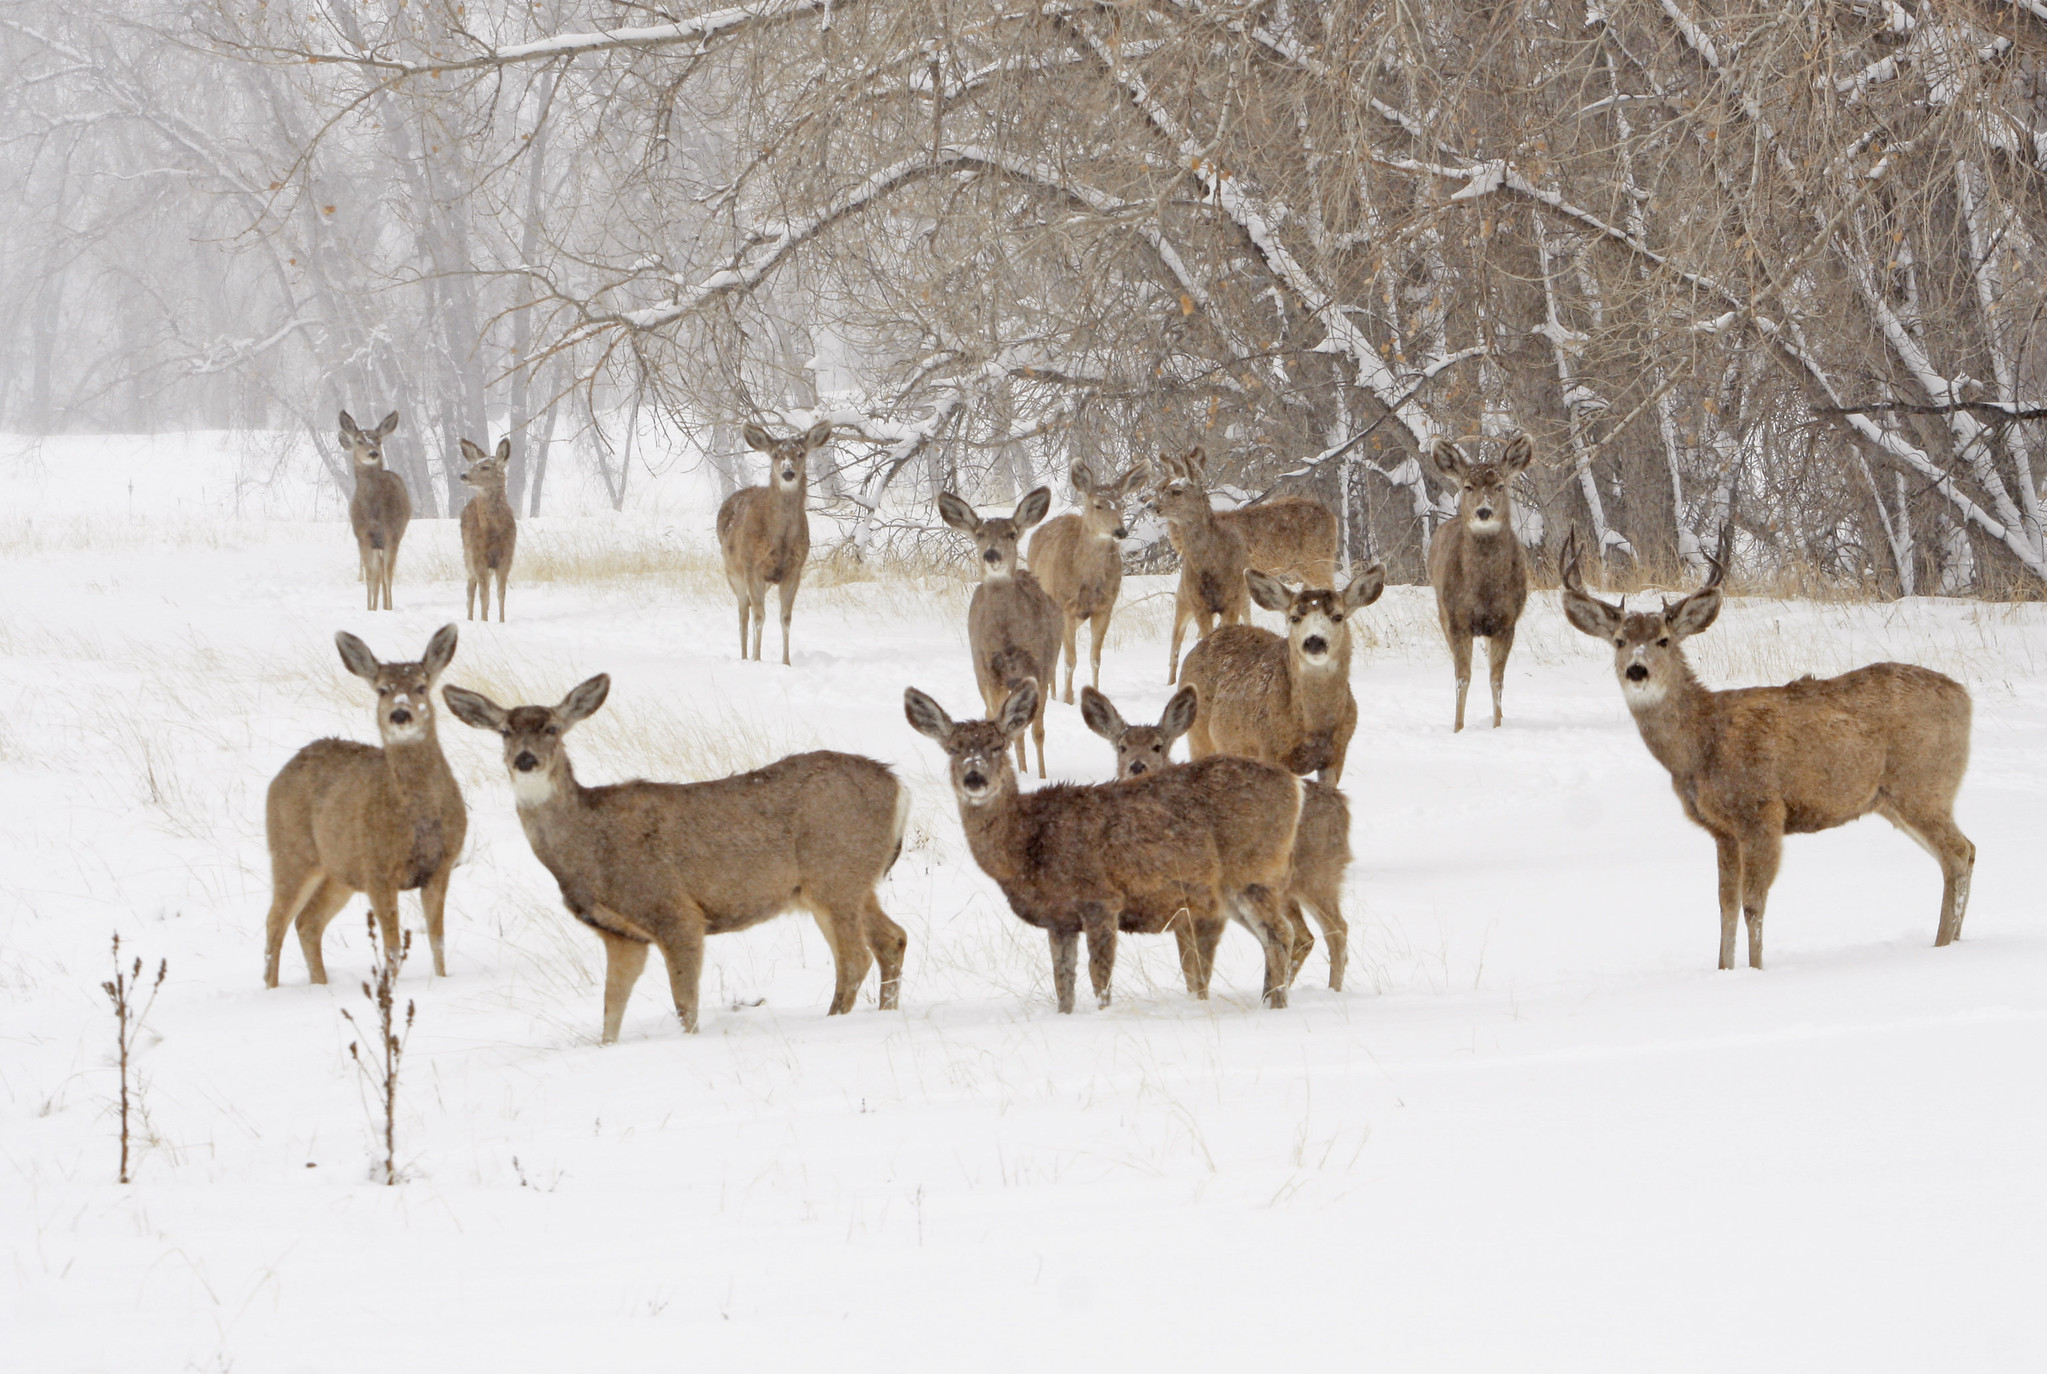 A herd of mule deer standing in the snow in winter.